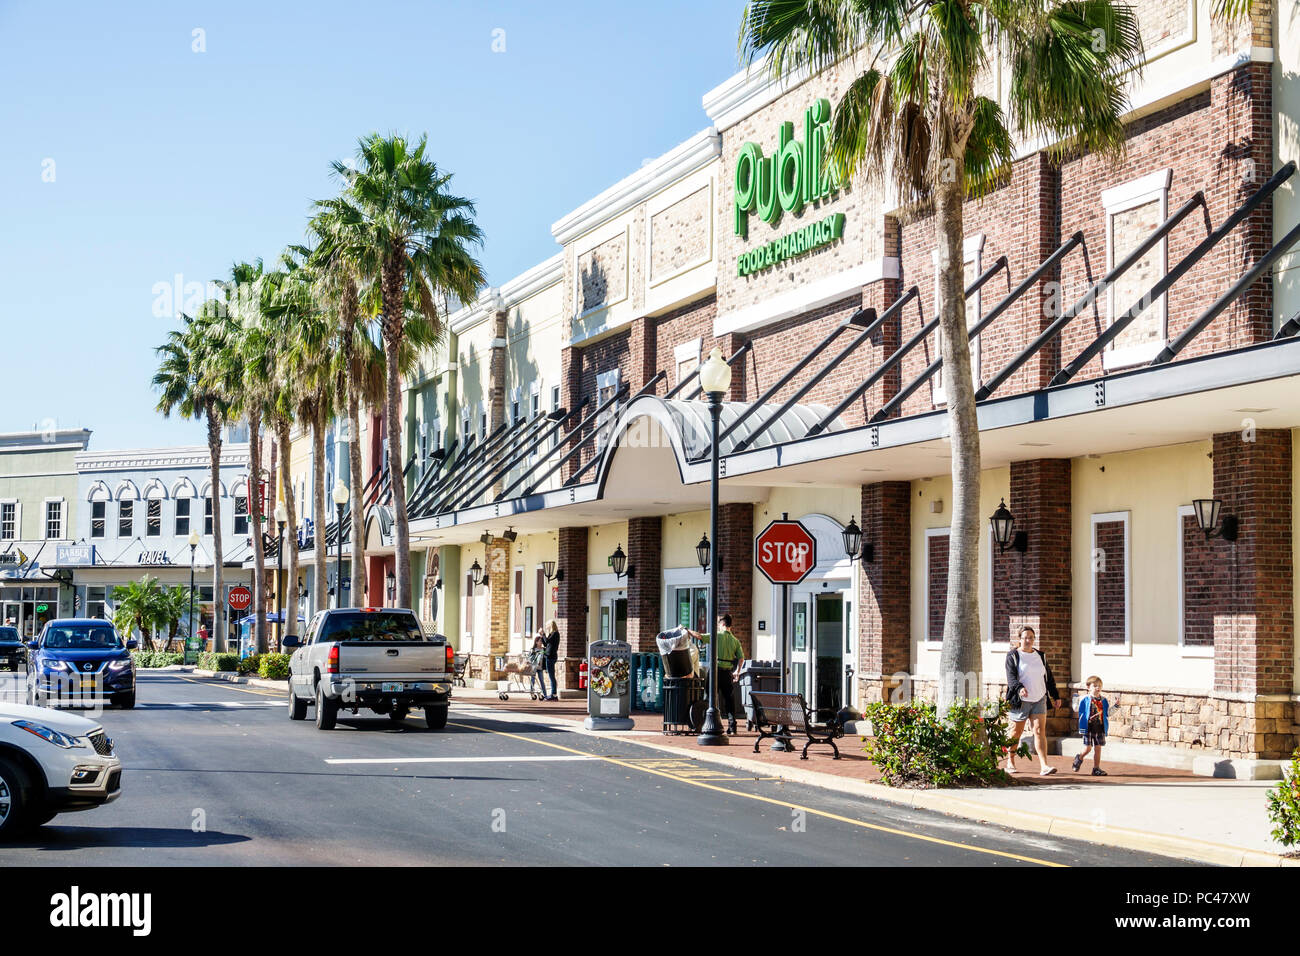 Port St. Saint Lucie Florida,Tradition,shopping center centre strip,Publix,supermarket,grocery store,exterior,parking lot,car cars,truck pedestrian,Sa Stock Photo